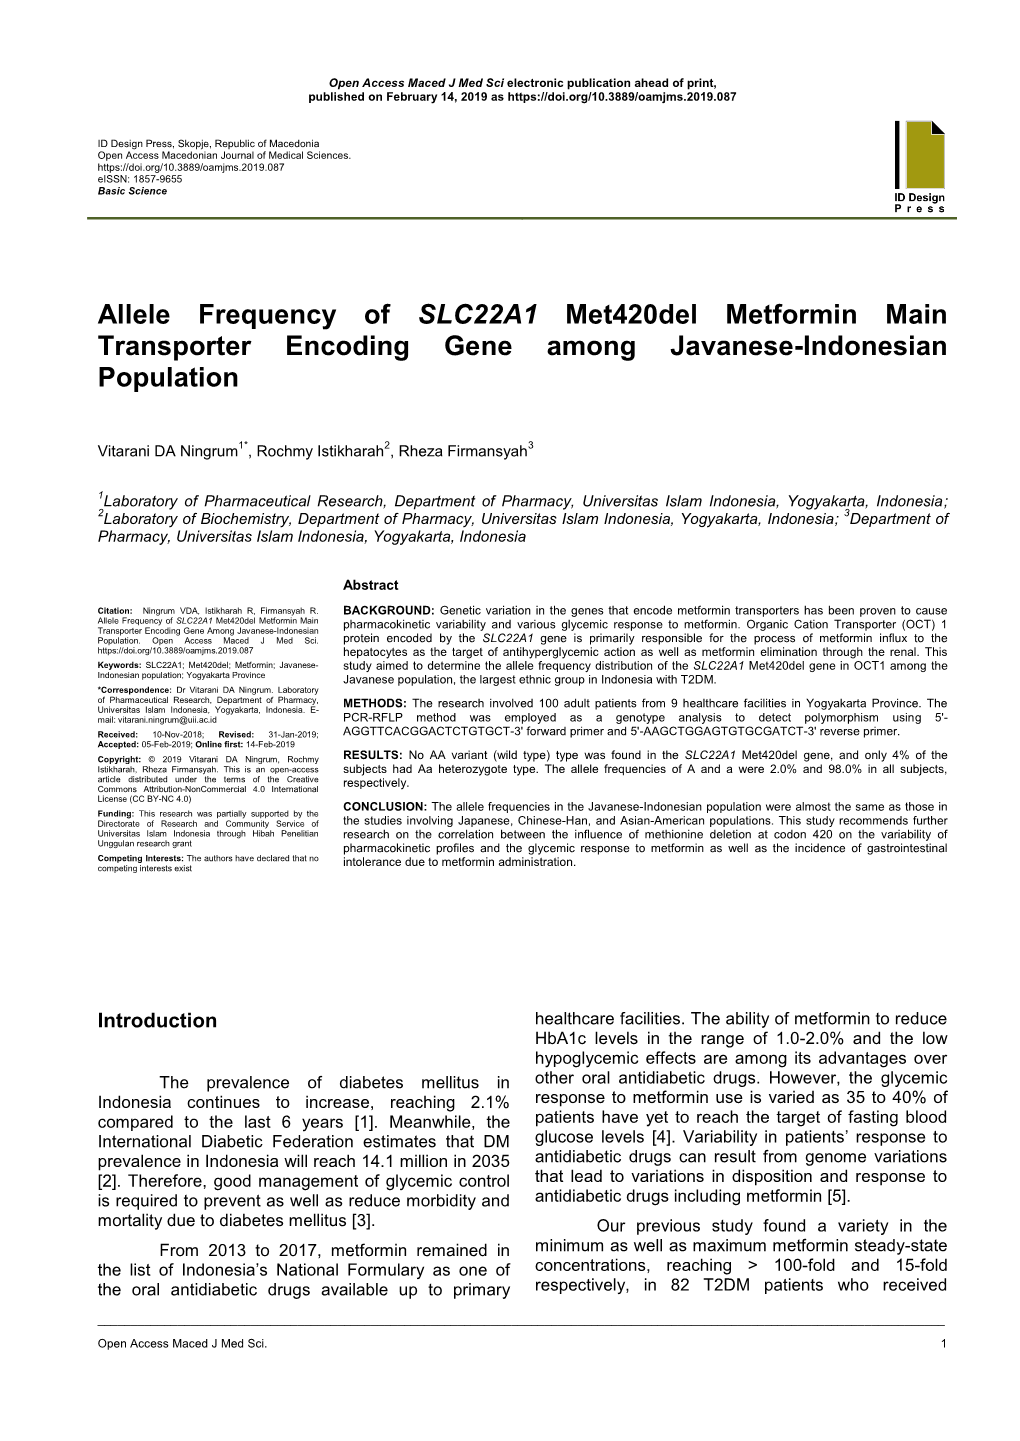 Allele Frequency of SLC22A1 Met420del Metformin Main Transporter Encoding Gene Among Javanese-Indonesian Population